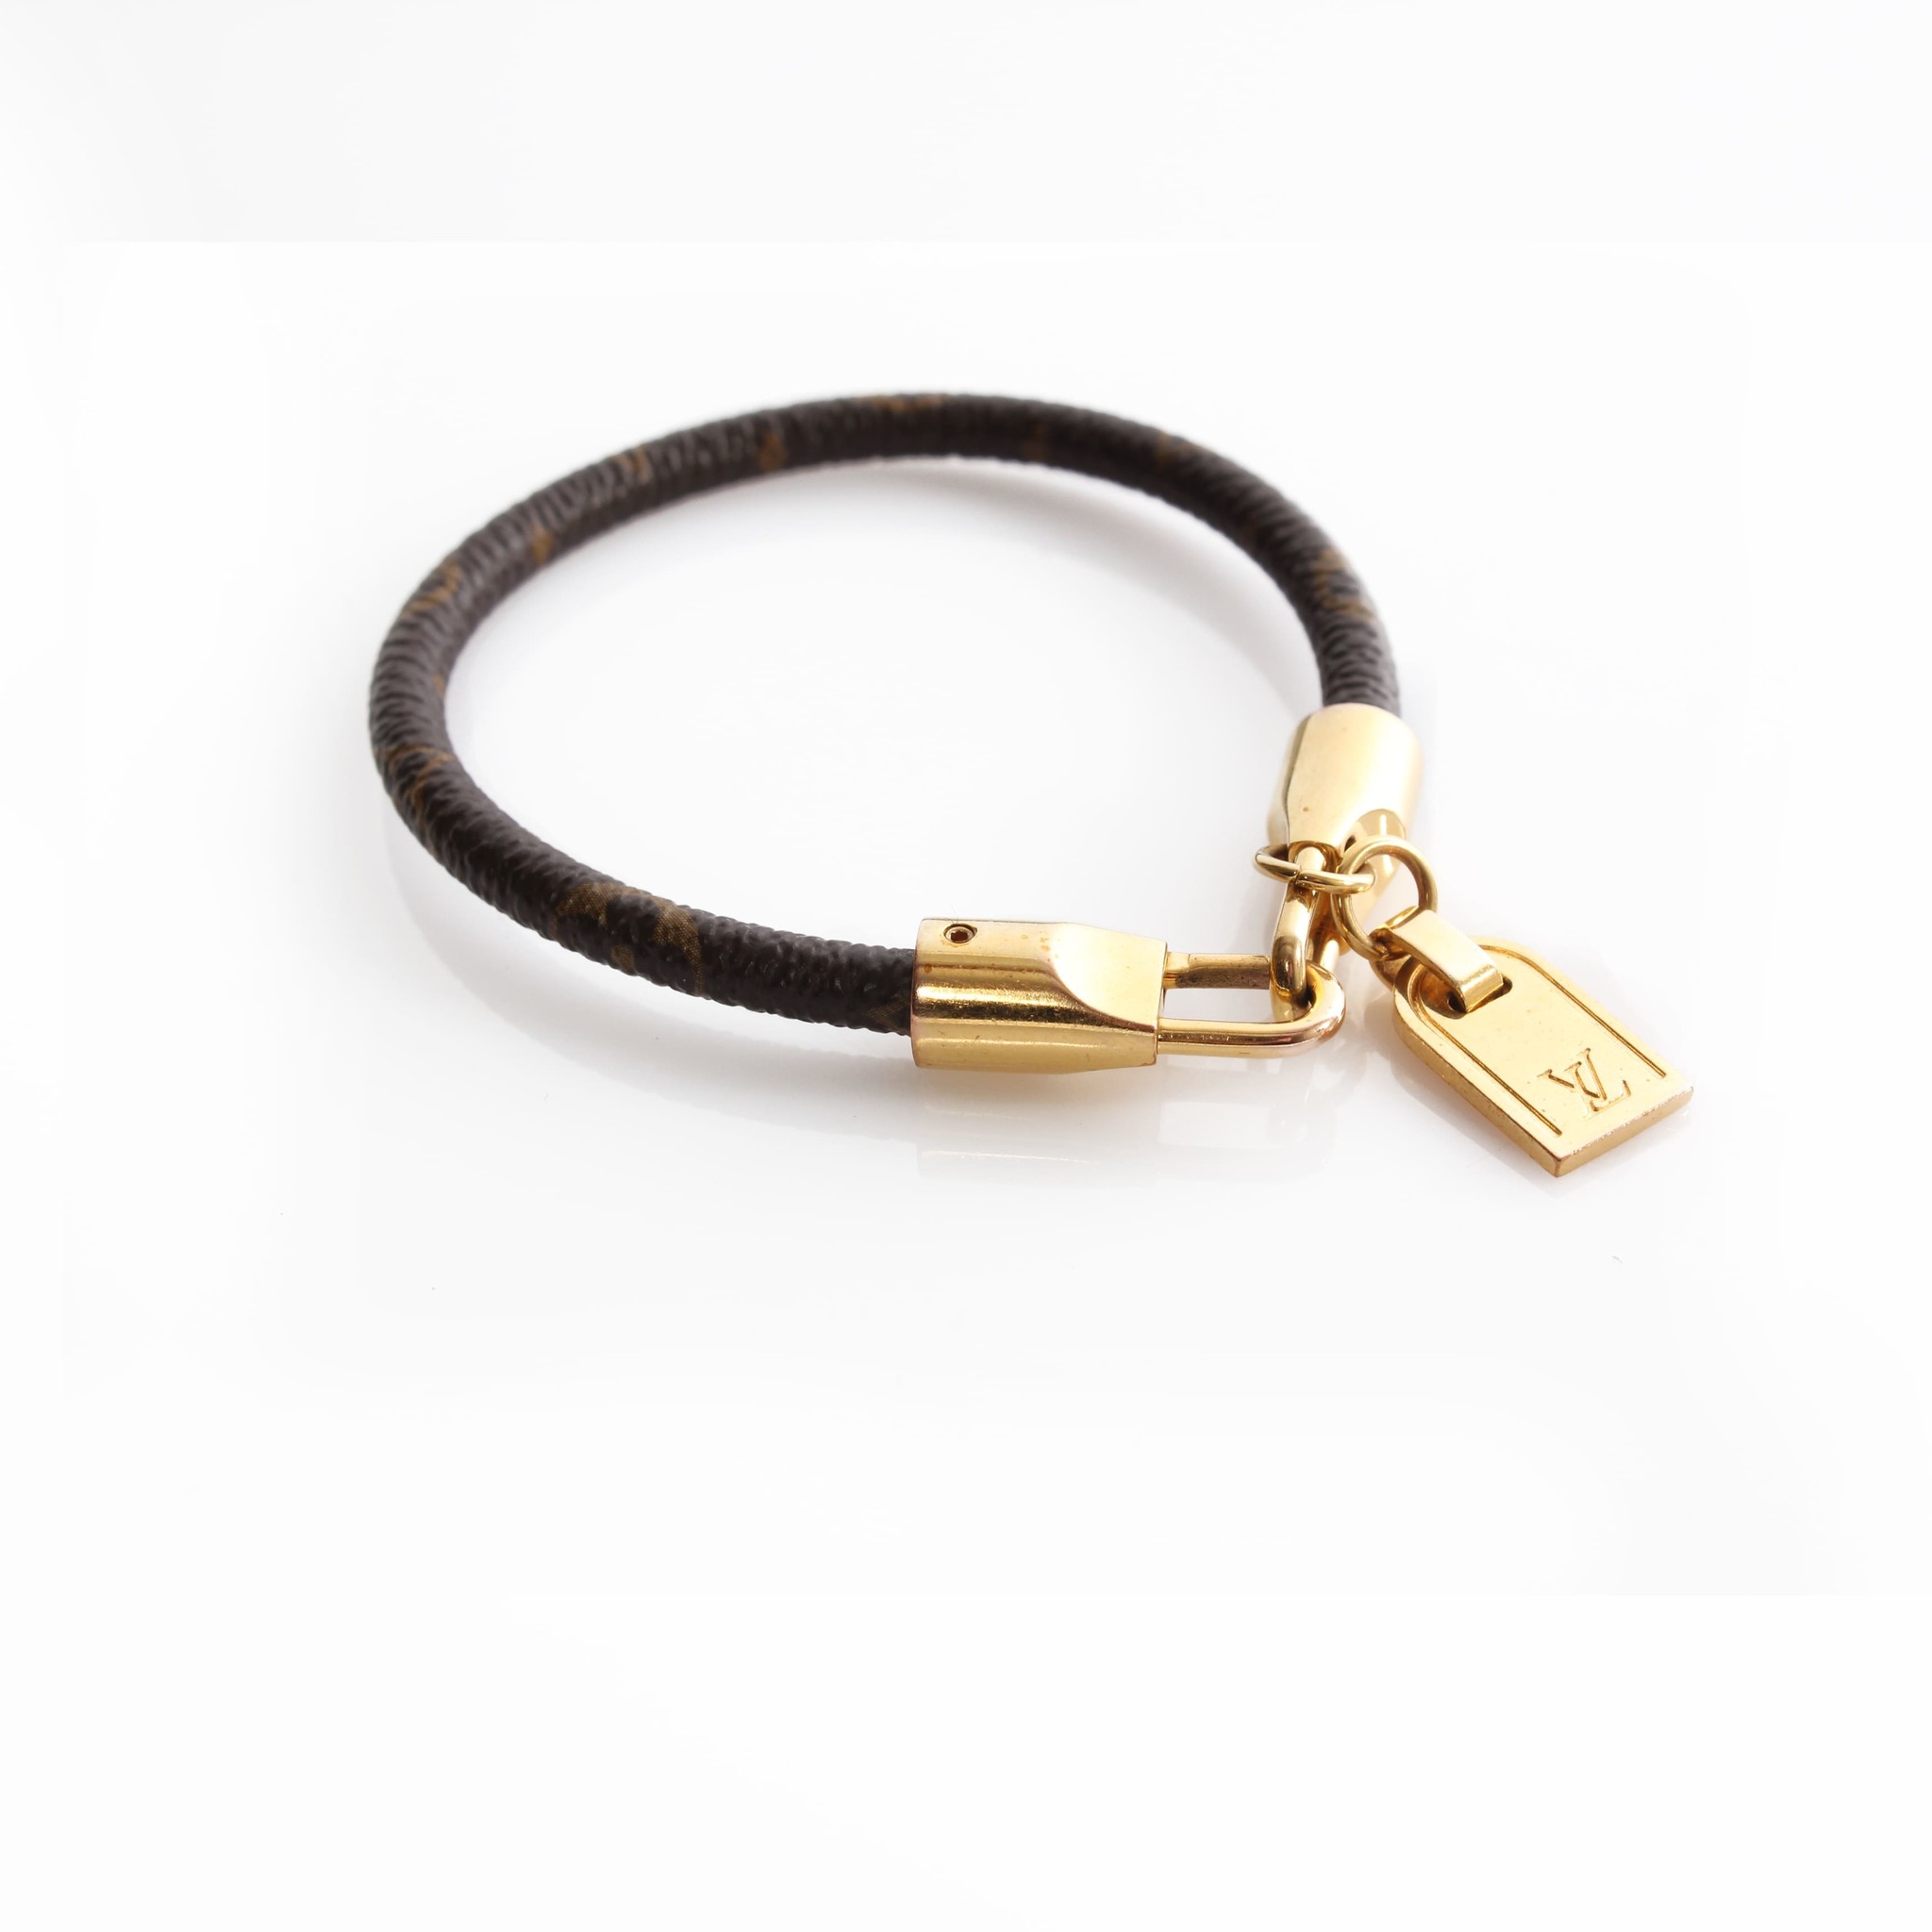 Louis Vuitton Louis Vuitton, brown monogram bracelet